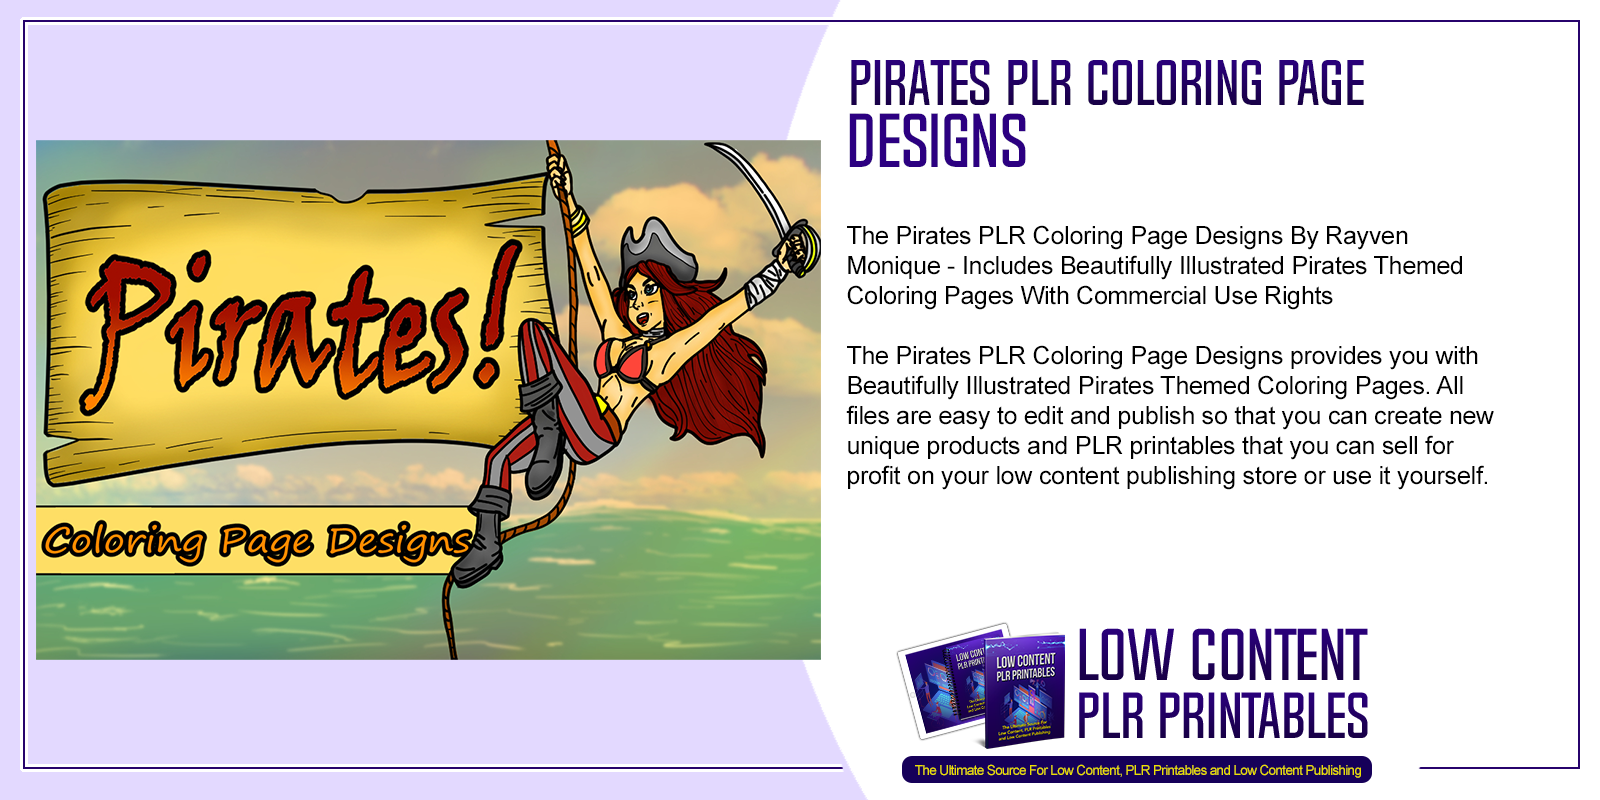 Pirates PLR Coloring Page Designs